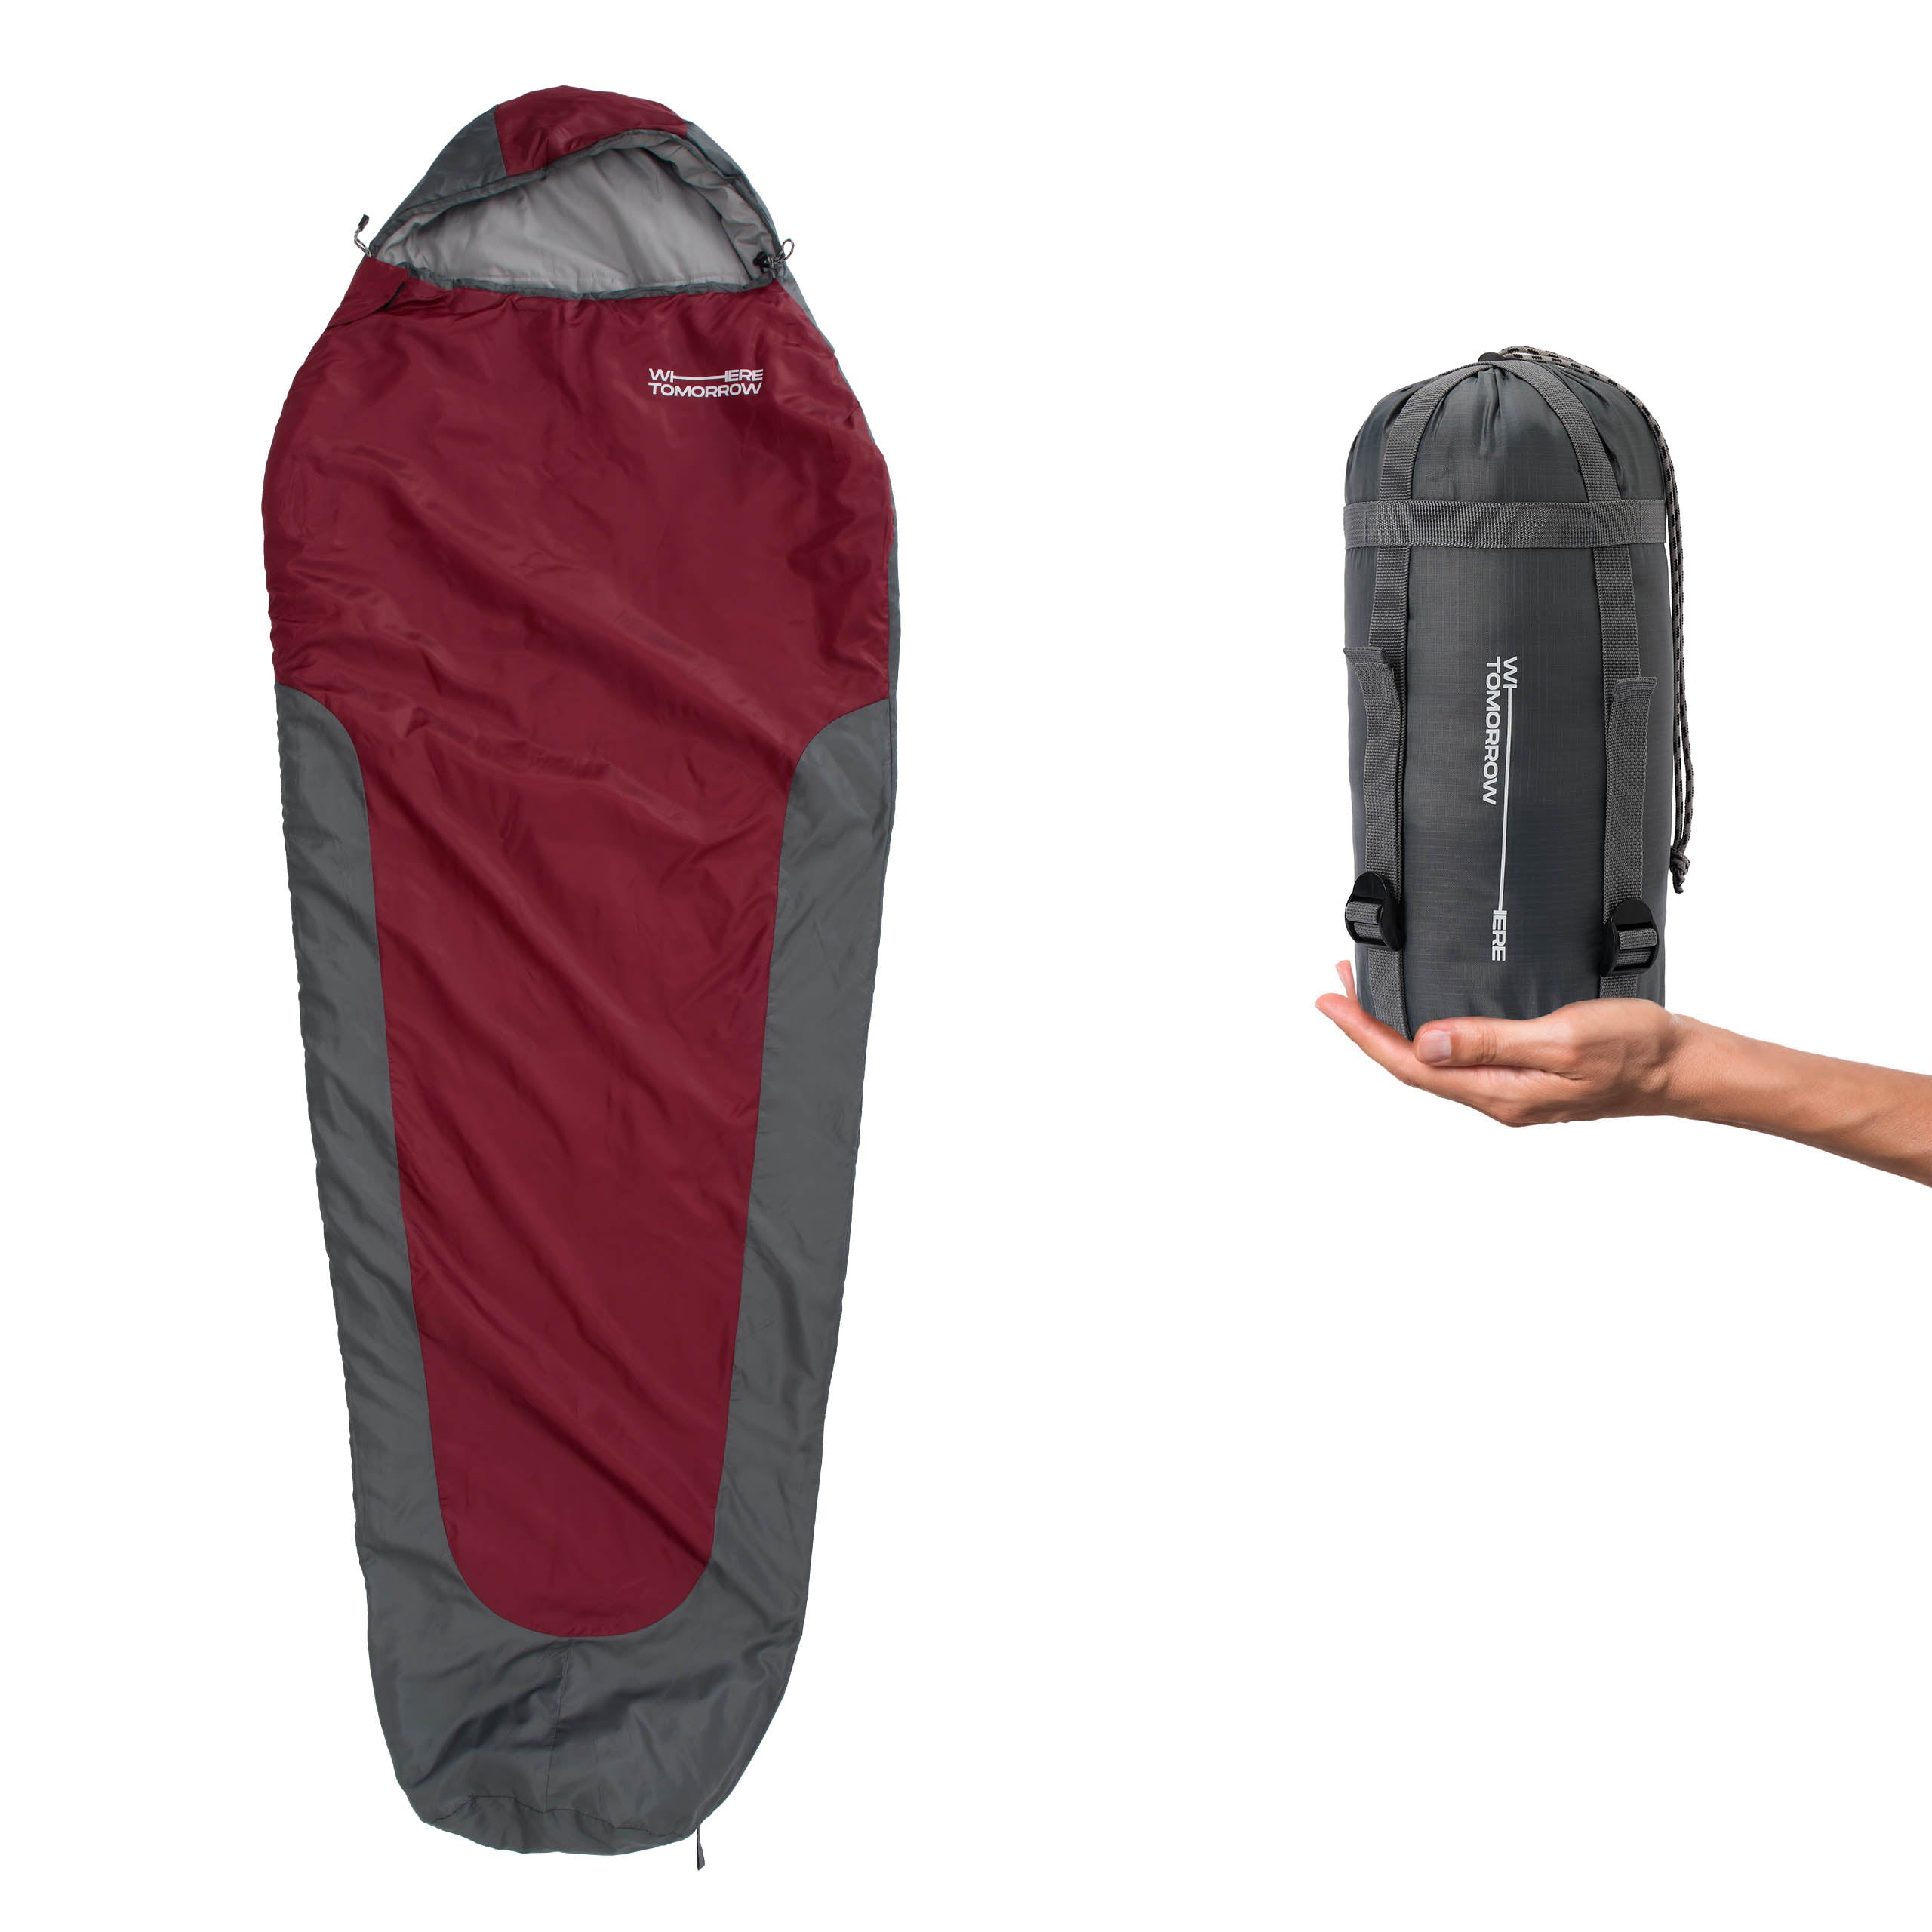 Camping Schlafsack Small & Light - Mumienschlafsack mit Tasche - 220 x 80 x 50 cm - Rot-Grau